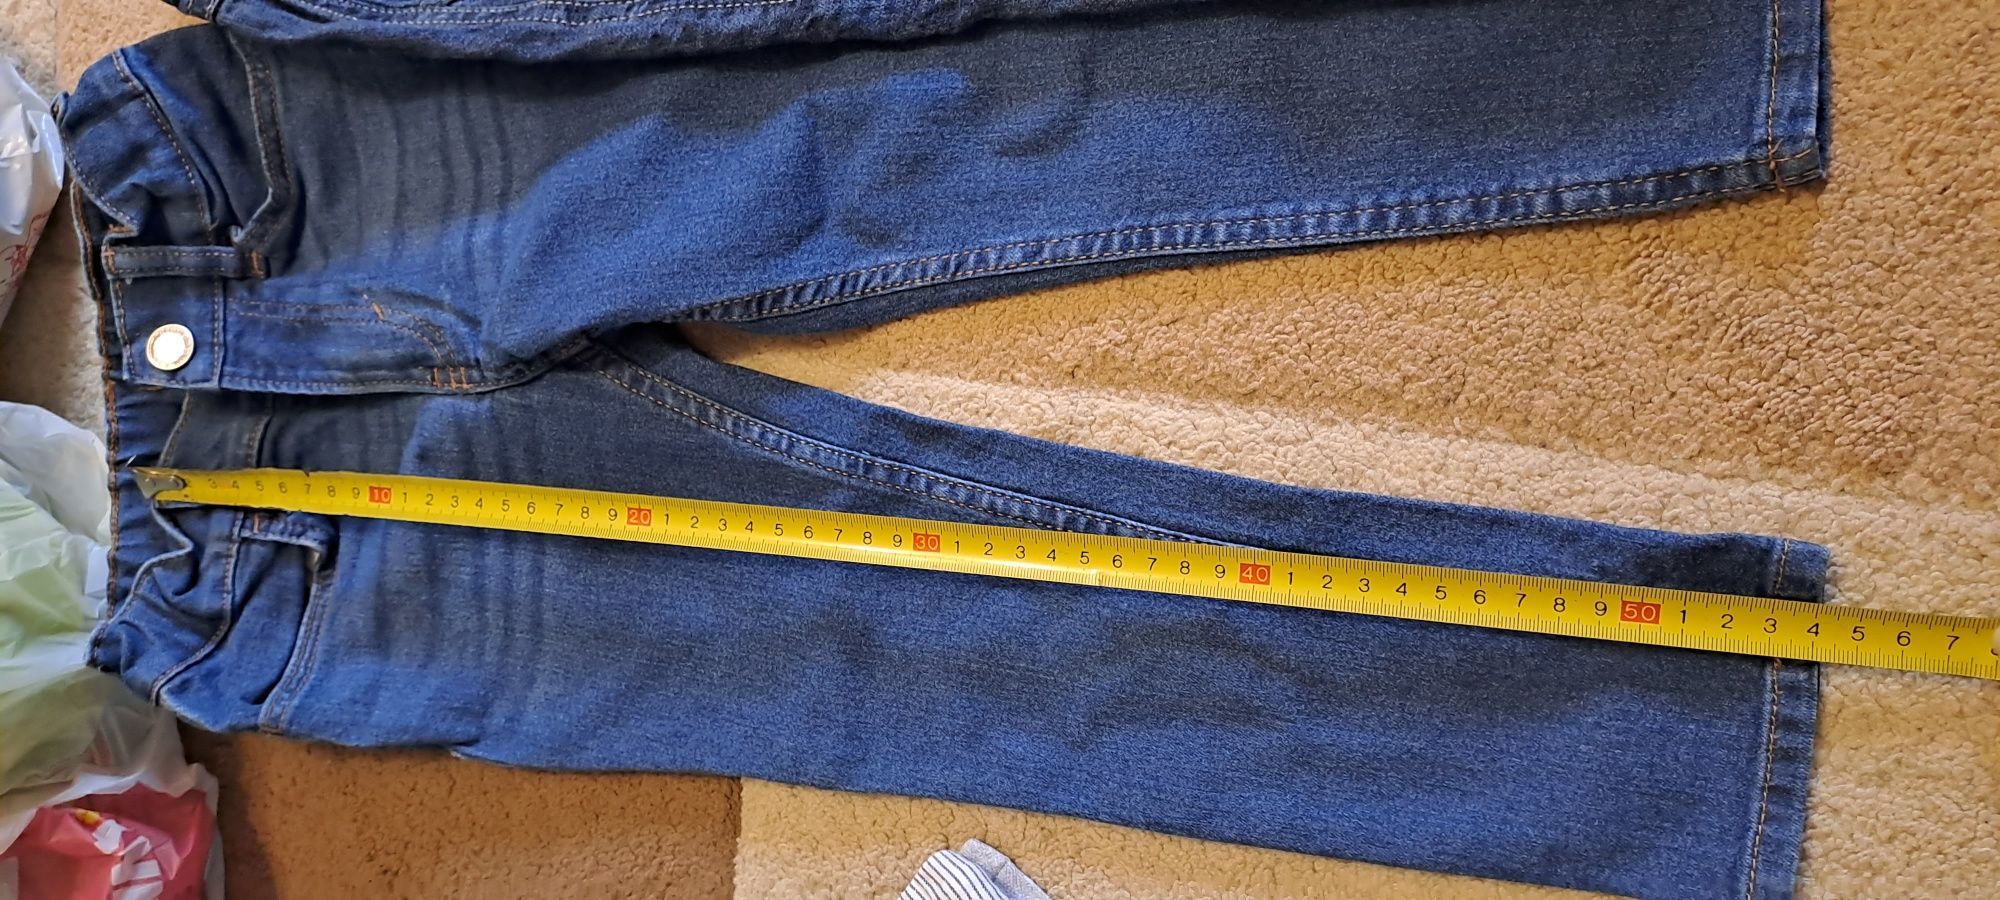 Blugi/jeans și pantaloni mărimea 98